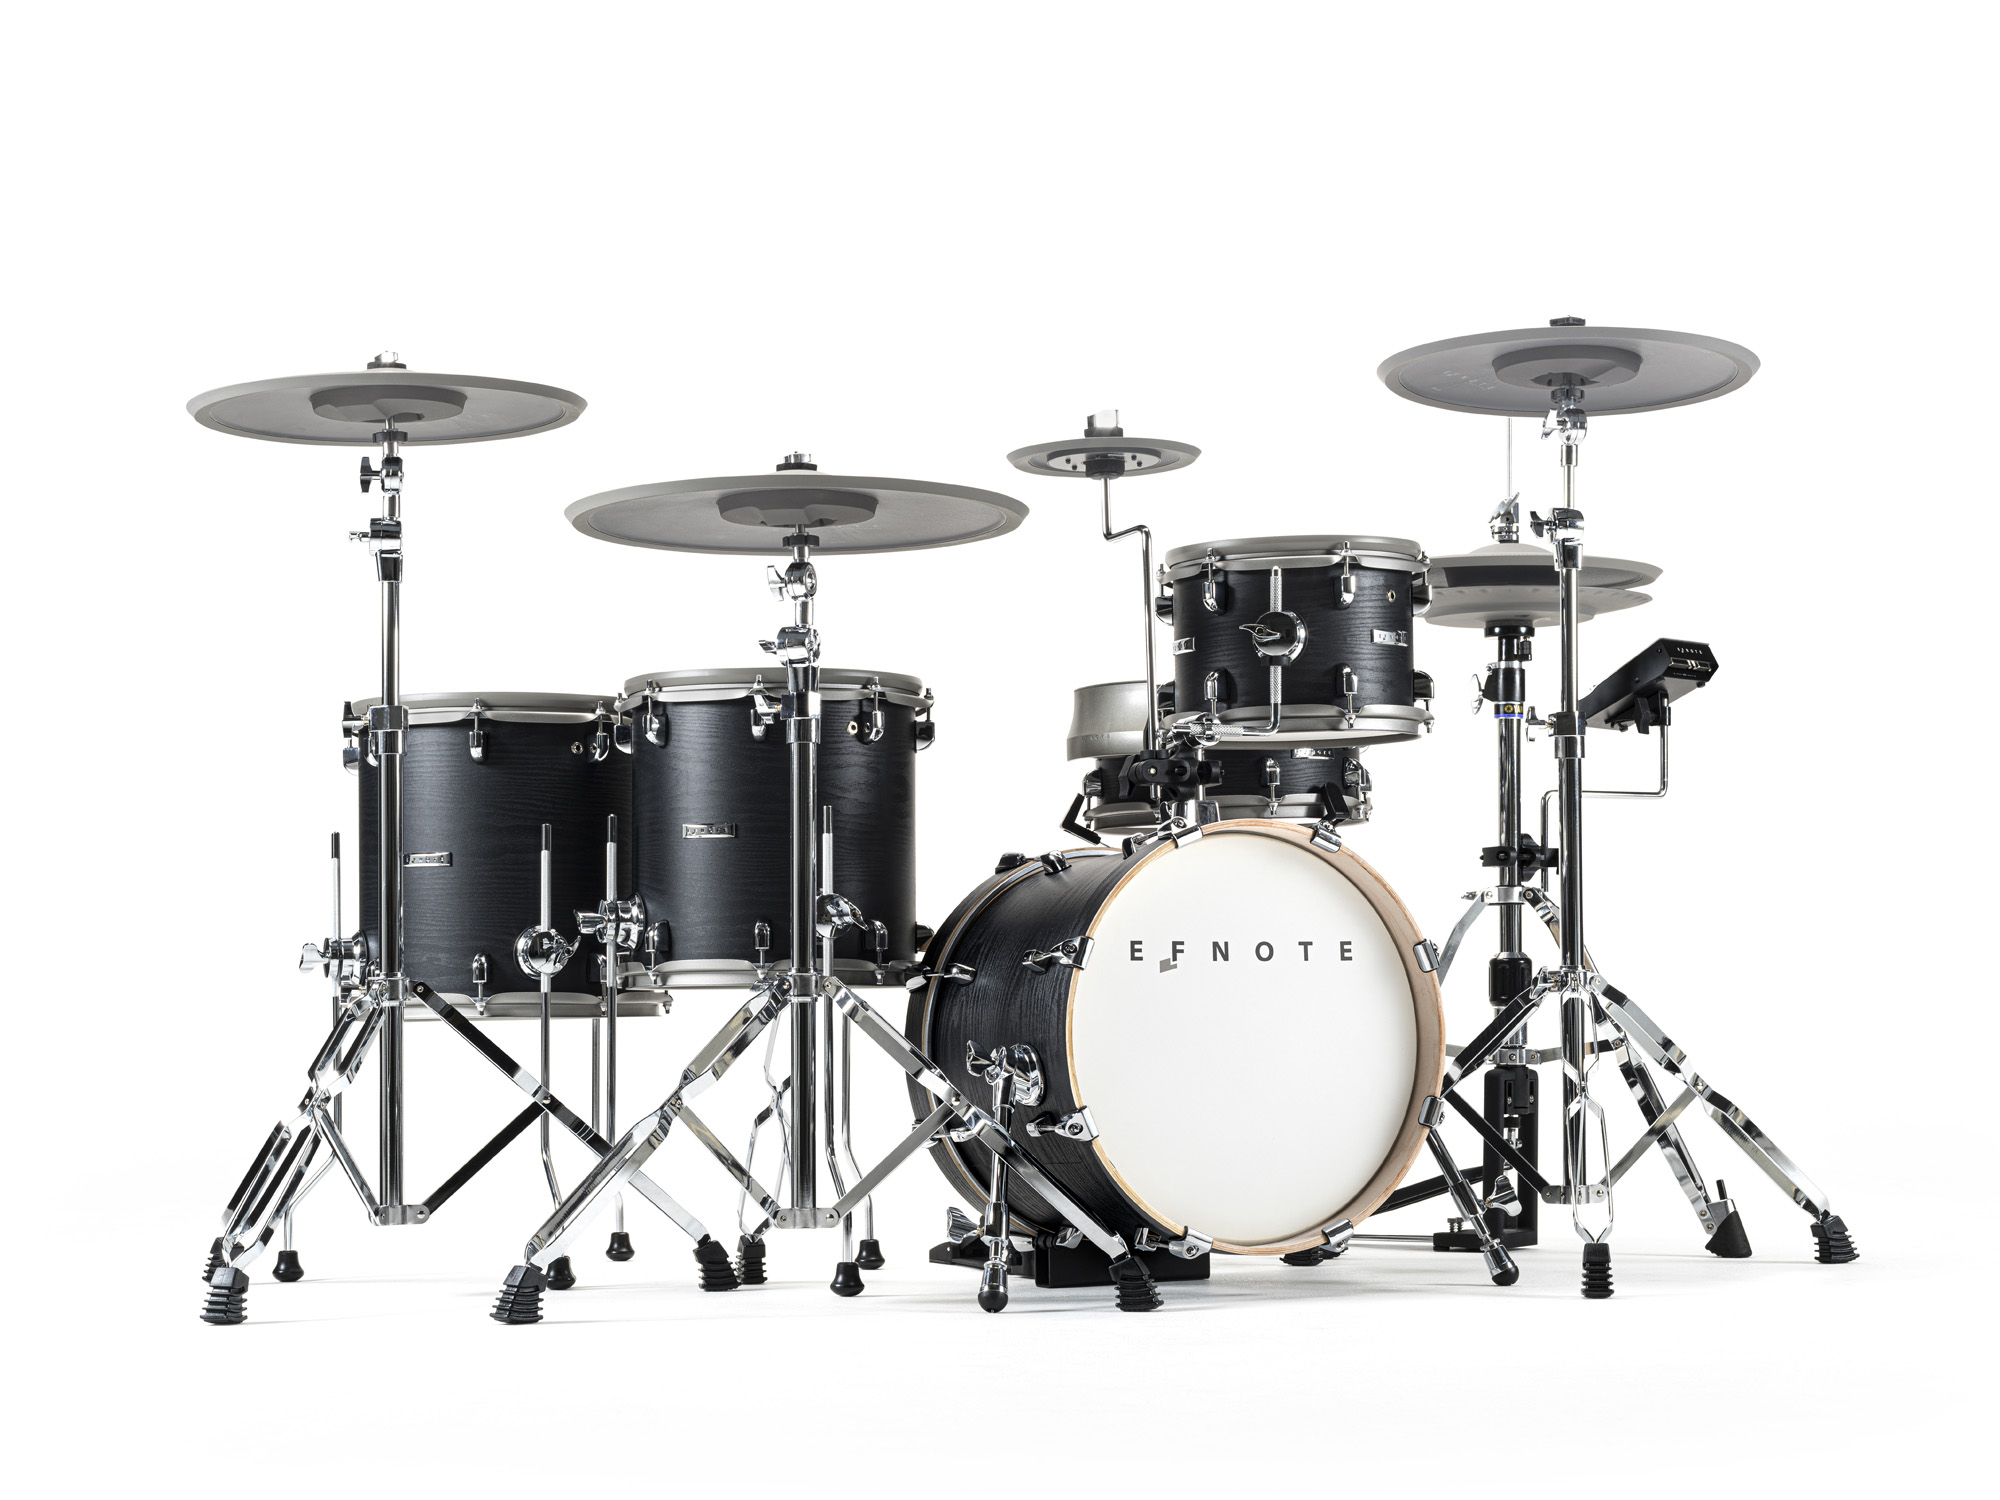 Efnote Efd5x Drum Kit - Komplett E-Drum Set - Variation 3